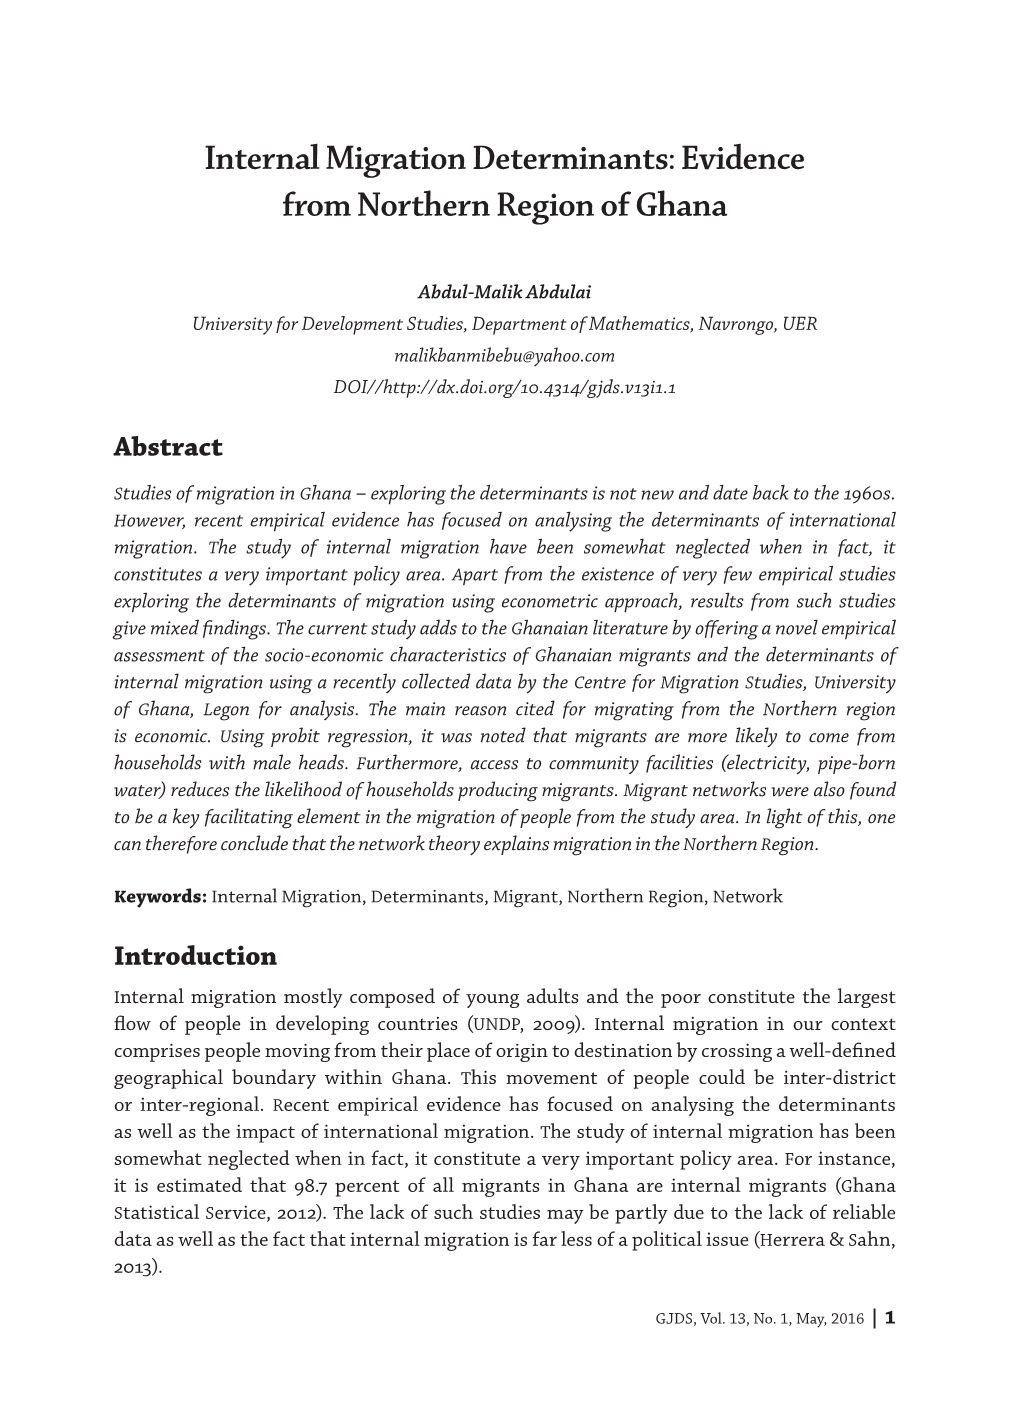 Internal Migration Determinants: Evidence from Northern Region of Ghana